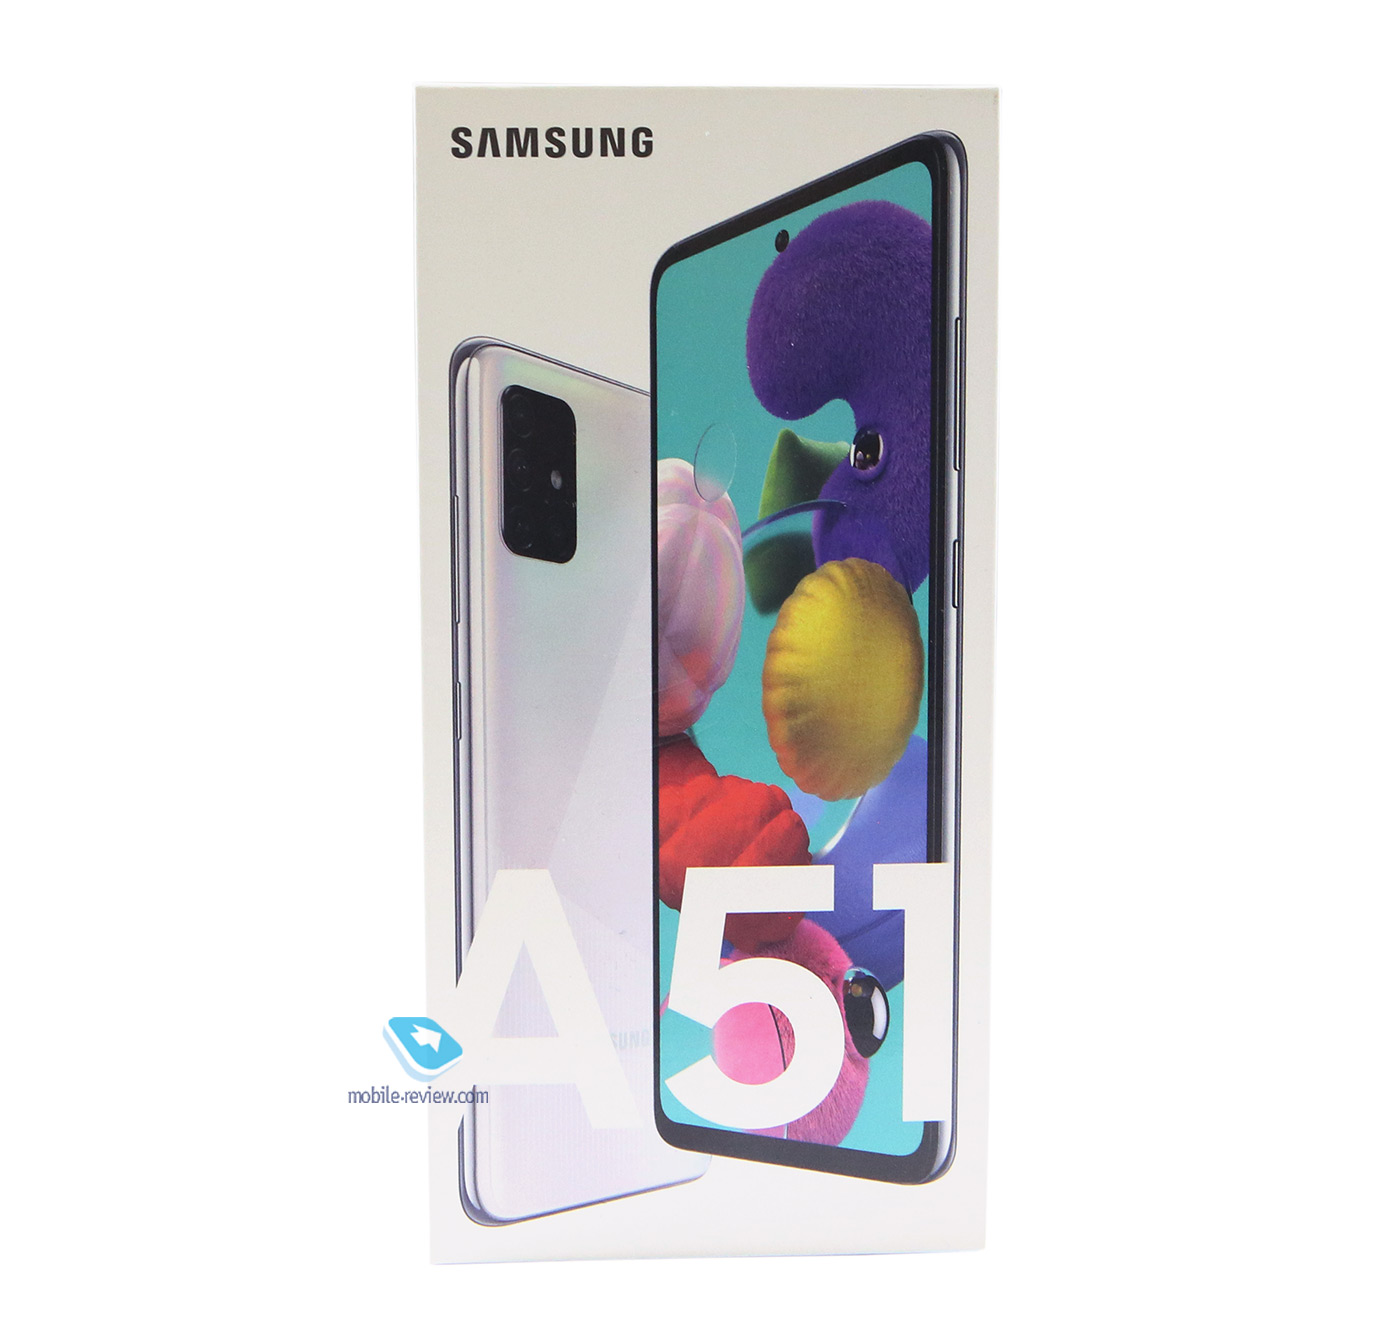   Samsung Galaxy M51 (SM-M515F/DS)